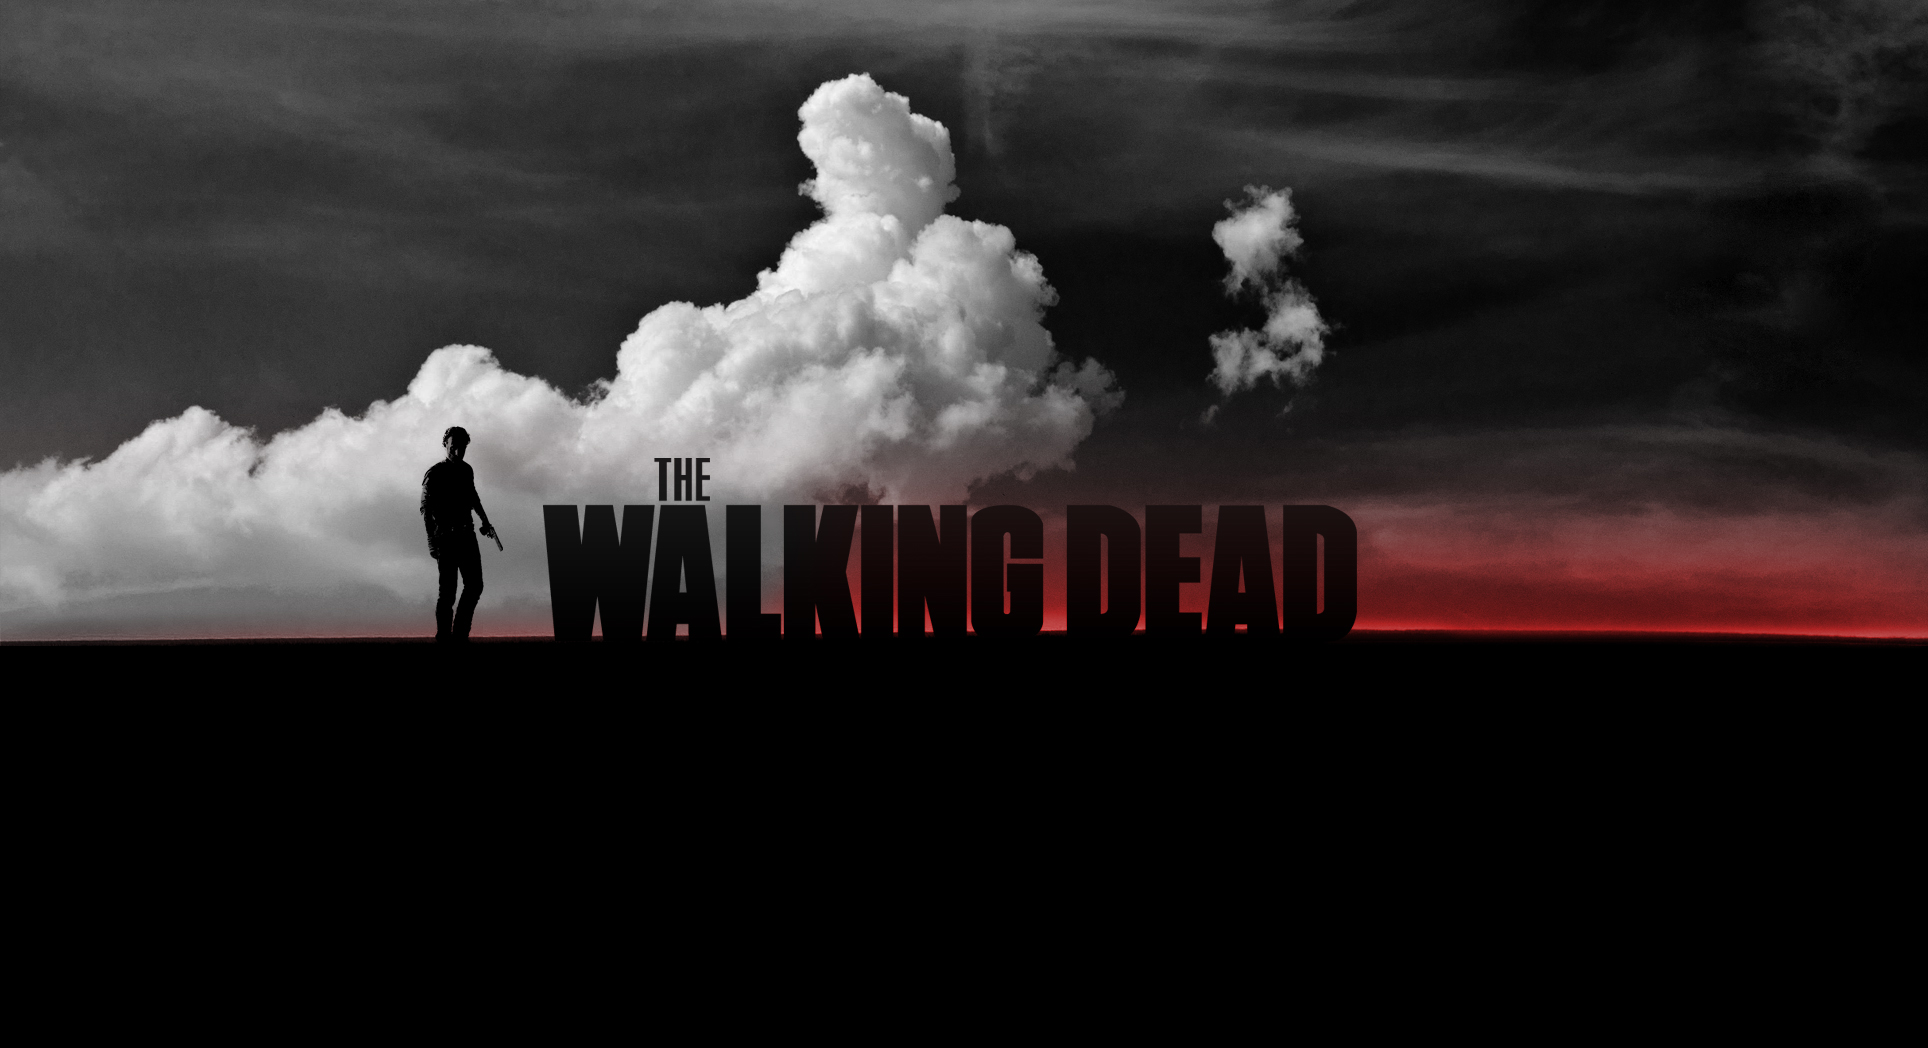 Walking Dead Wallpaper Image Picture #5638 Wallpaper | High ...